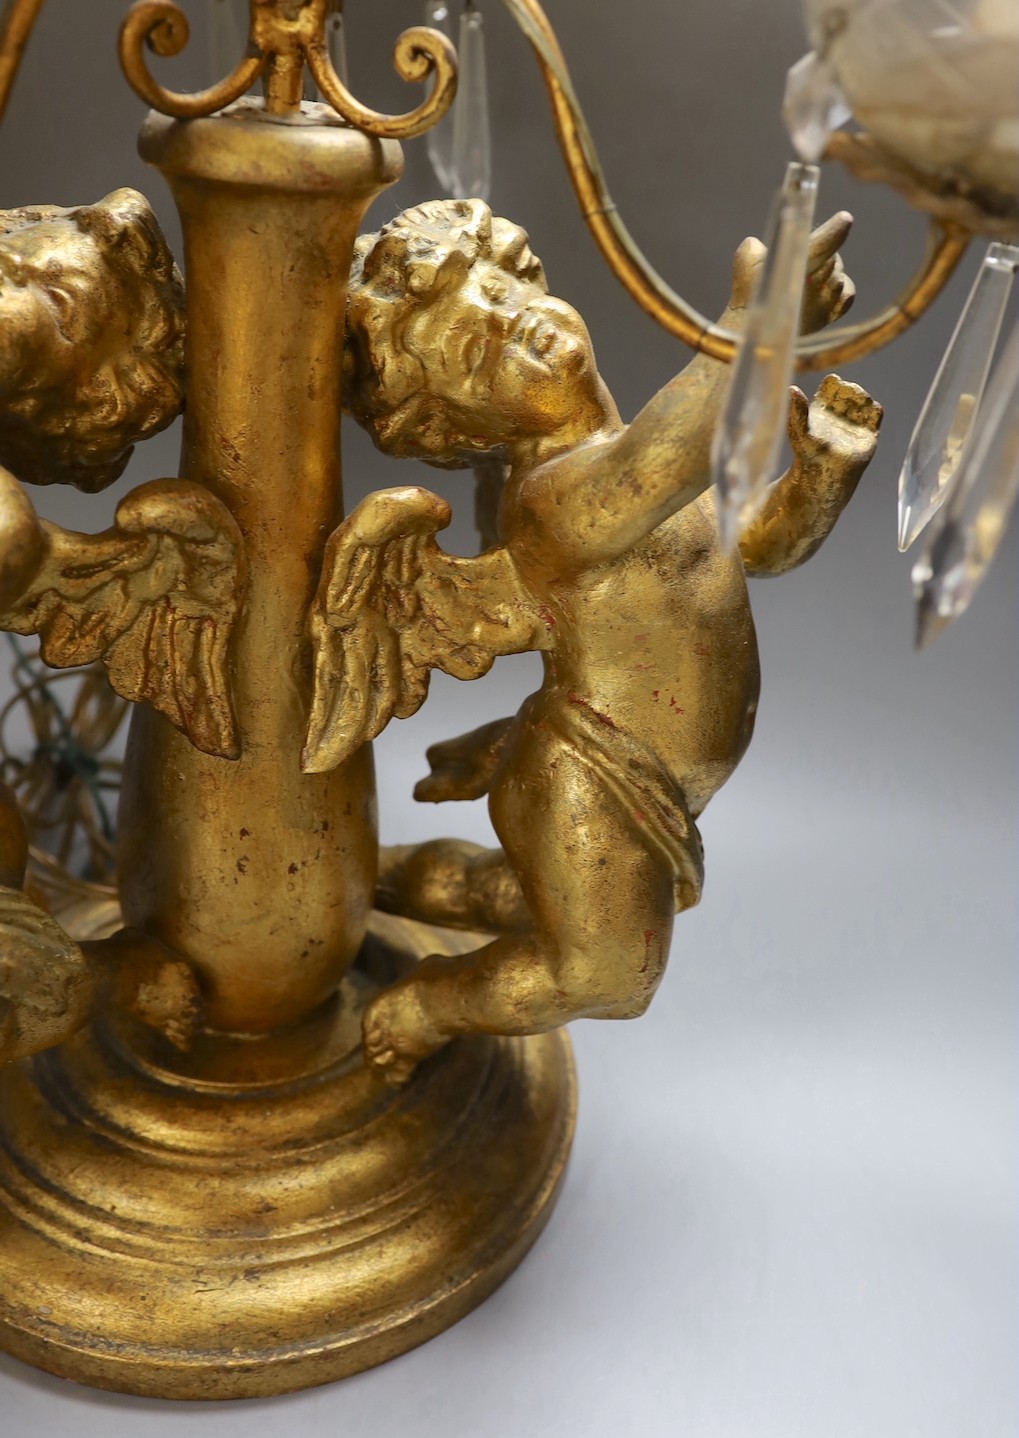 An Italian three branch gilt composition cherubic lamp with cut glass lustre drops - 64cm high